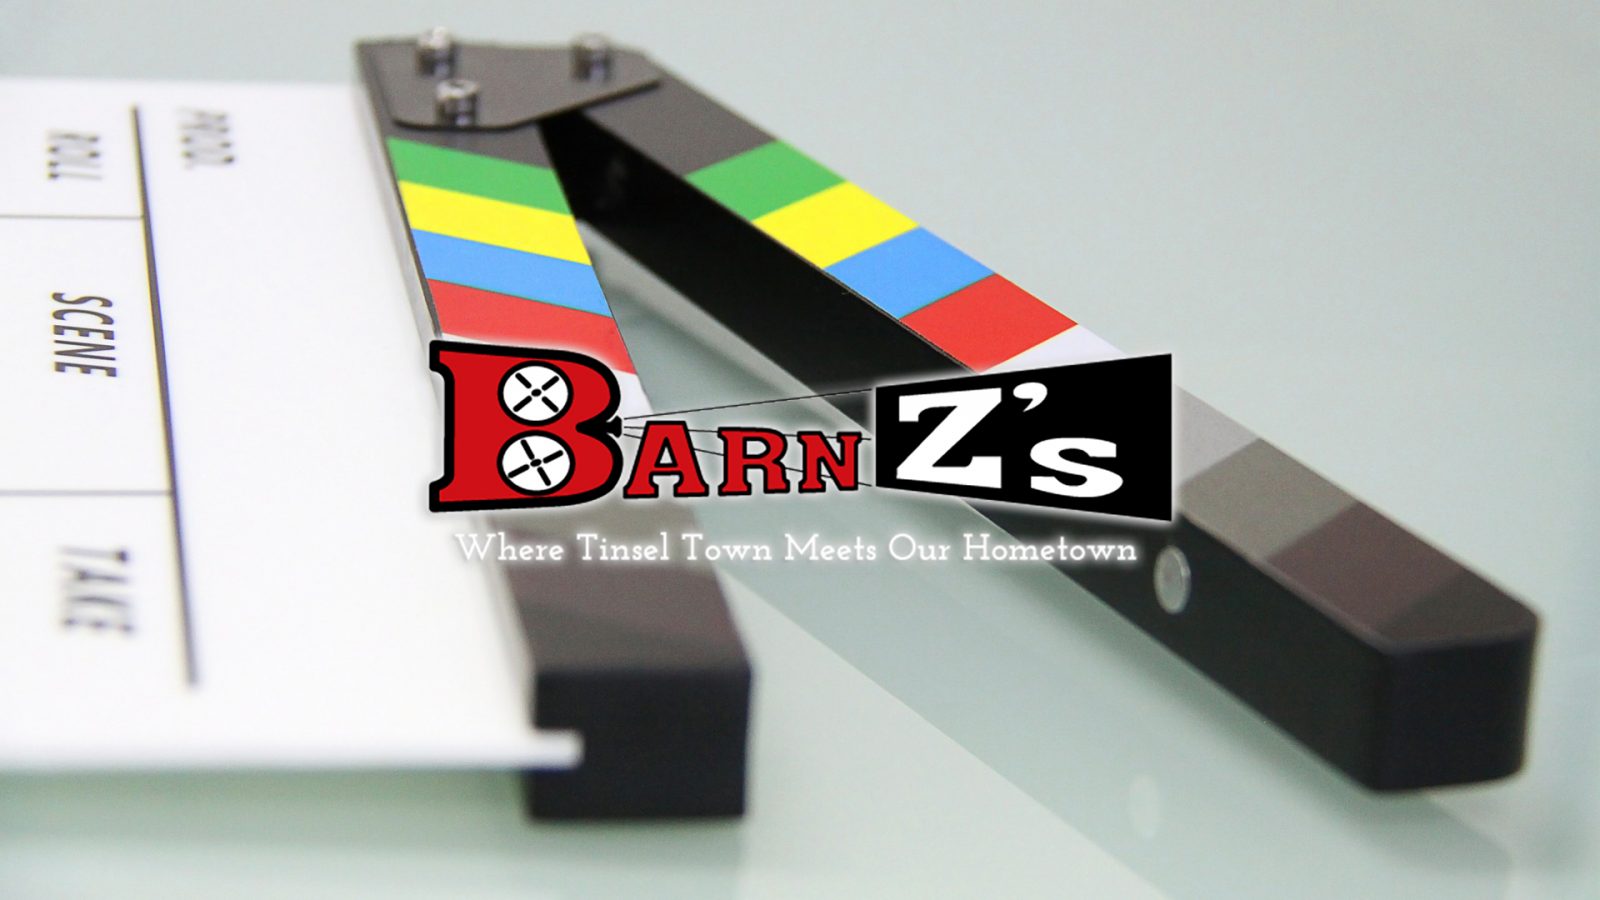 Win a $20 Gift Card to BarnZ’s Cinemas